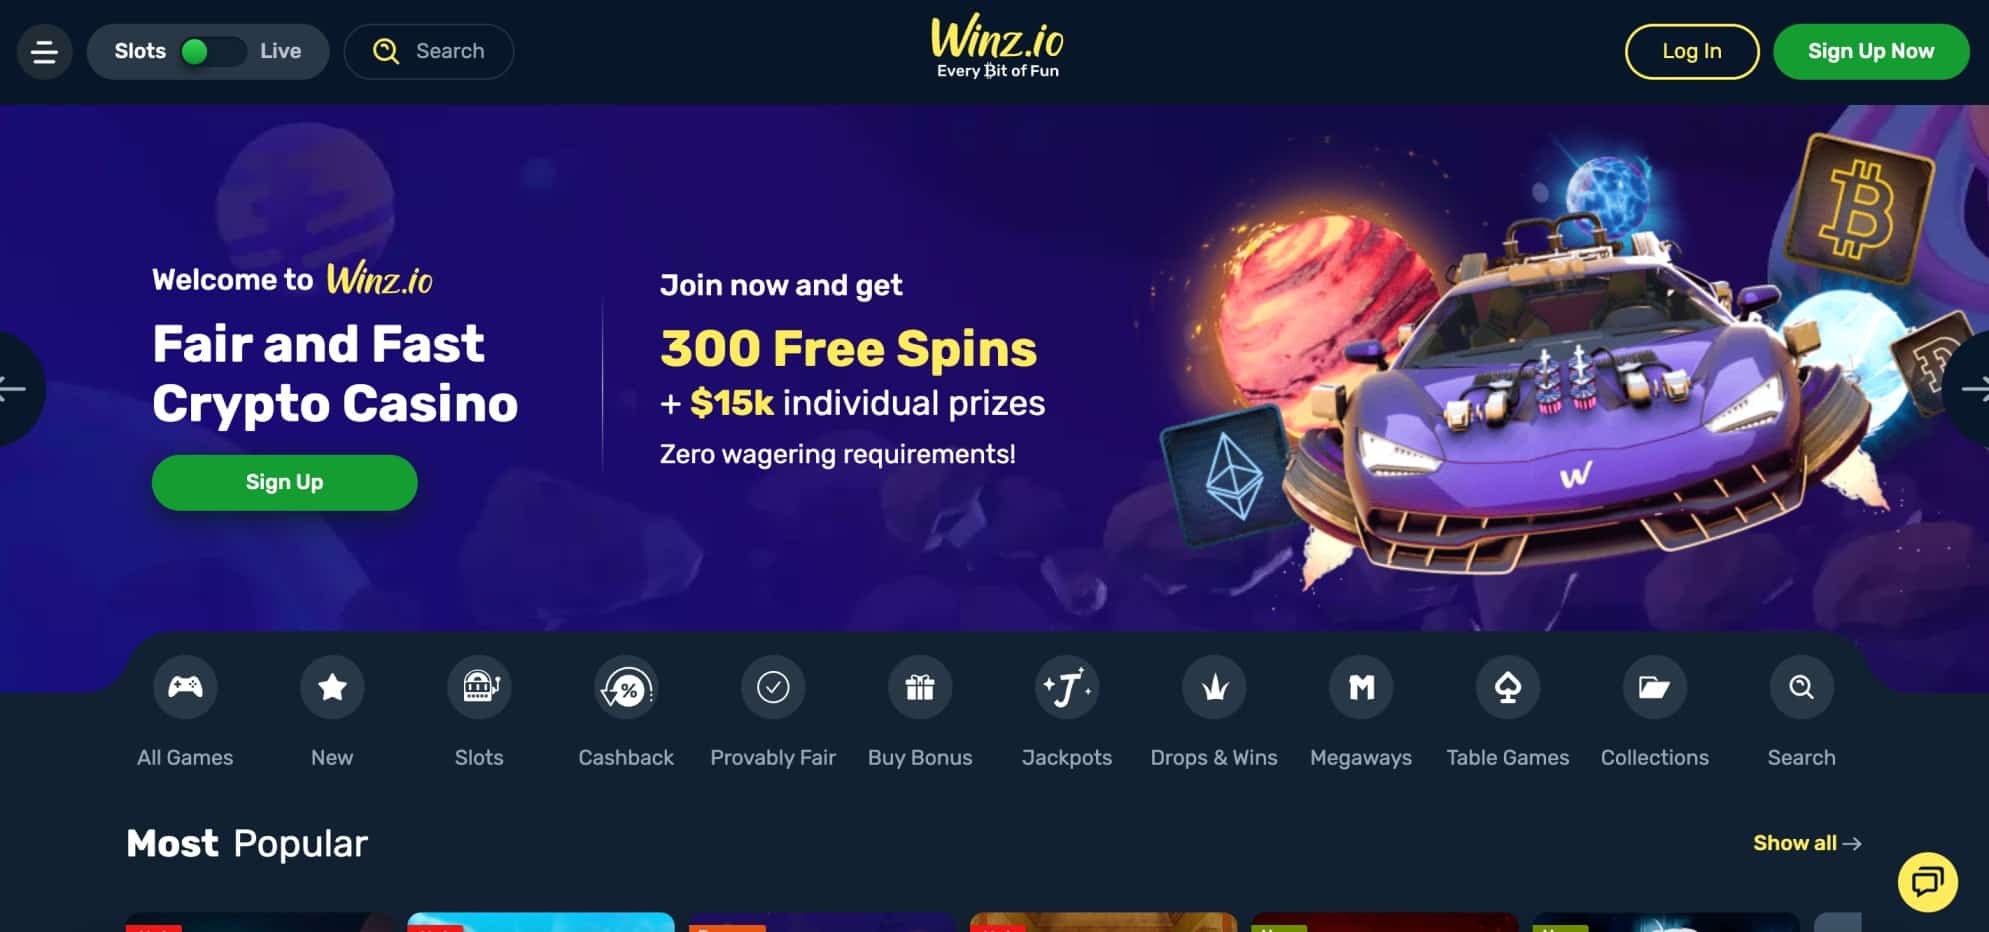 Winz.io - Crypto Casino Vietnam Review